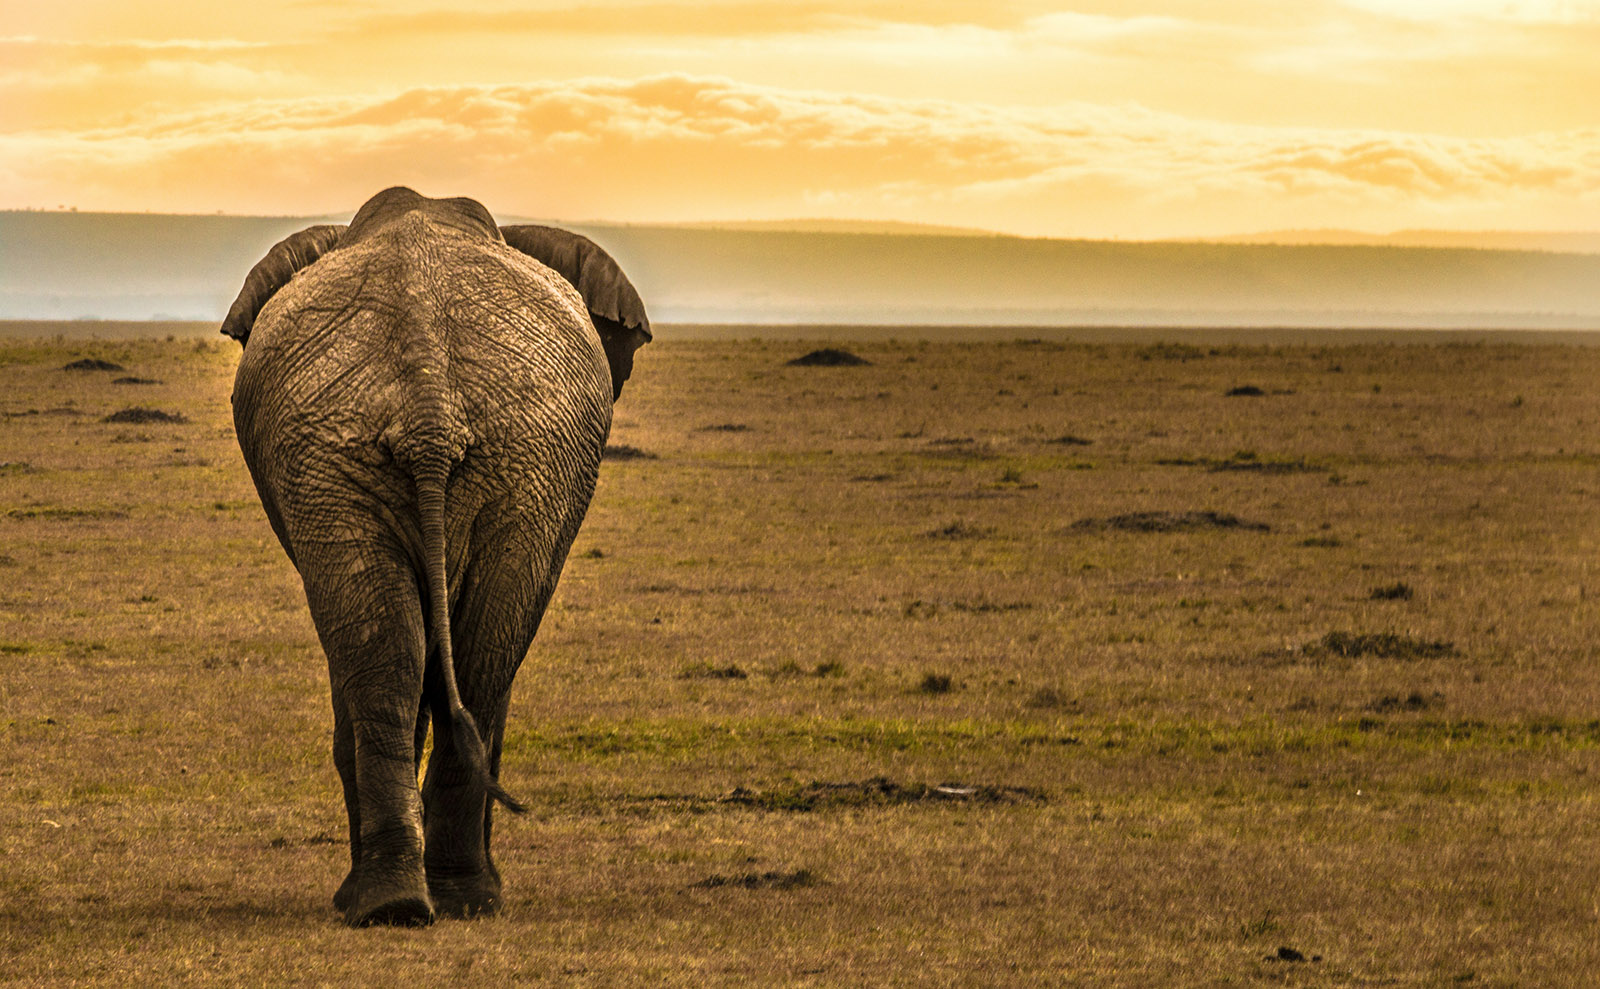 elephant walking away from the camera in the Kenyan desert